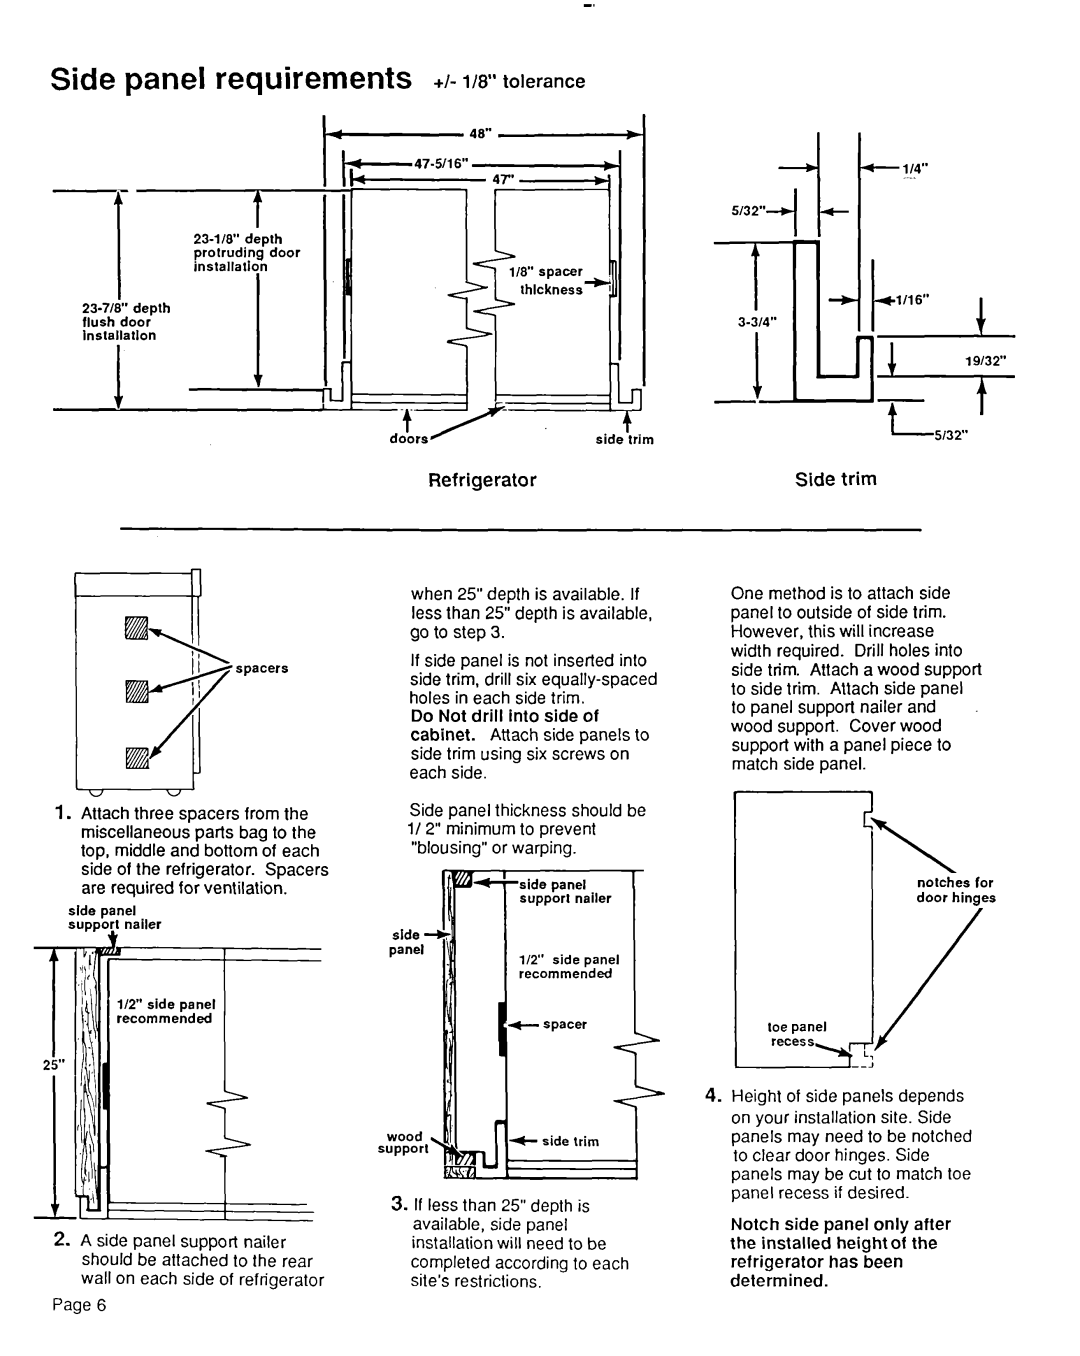 KitchenAid S-302 installation instructions Side panel requirements, 23-718” depth flush door inslallaflon 